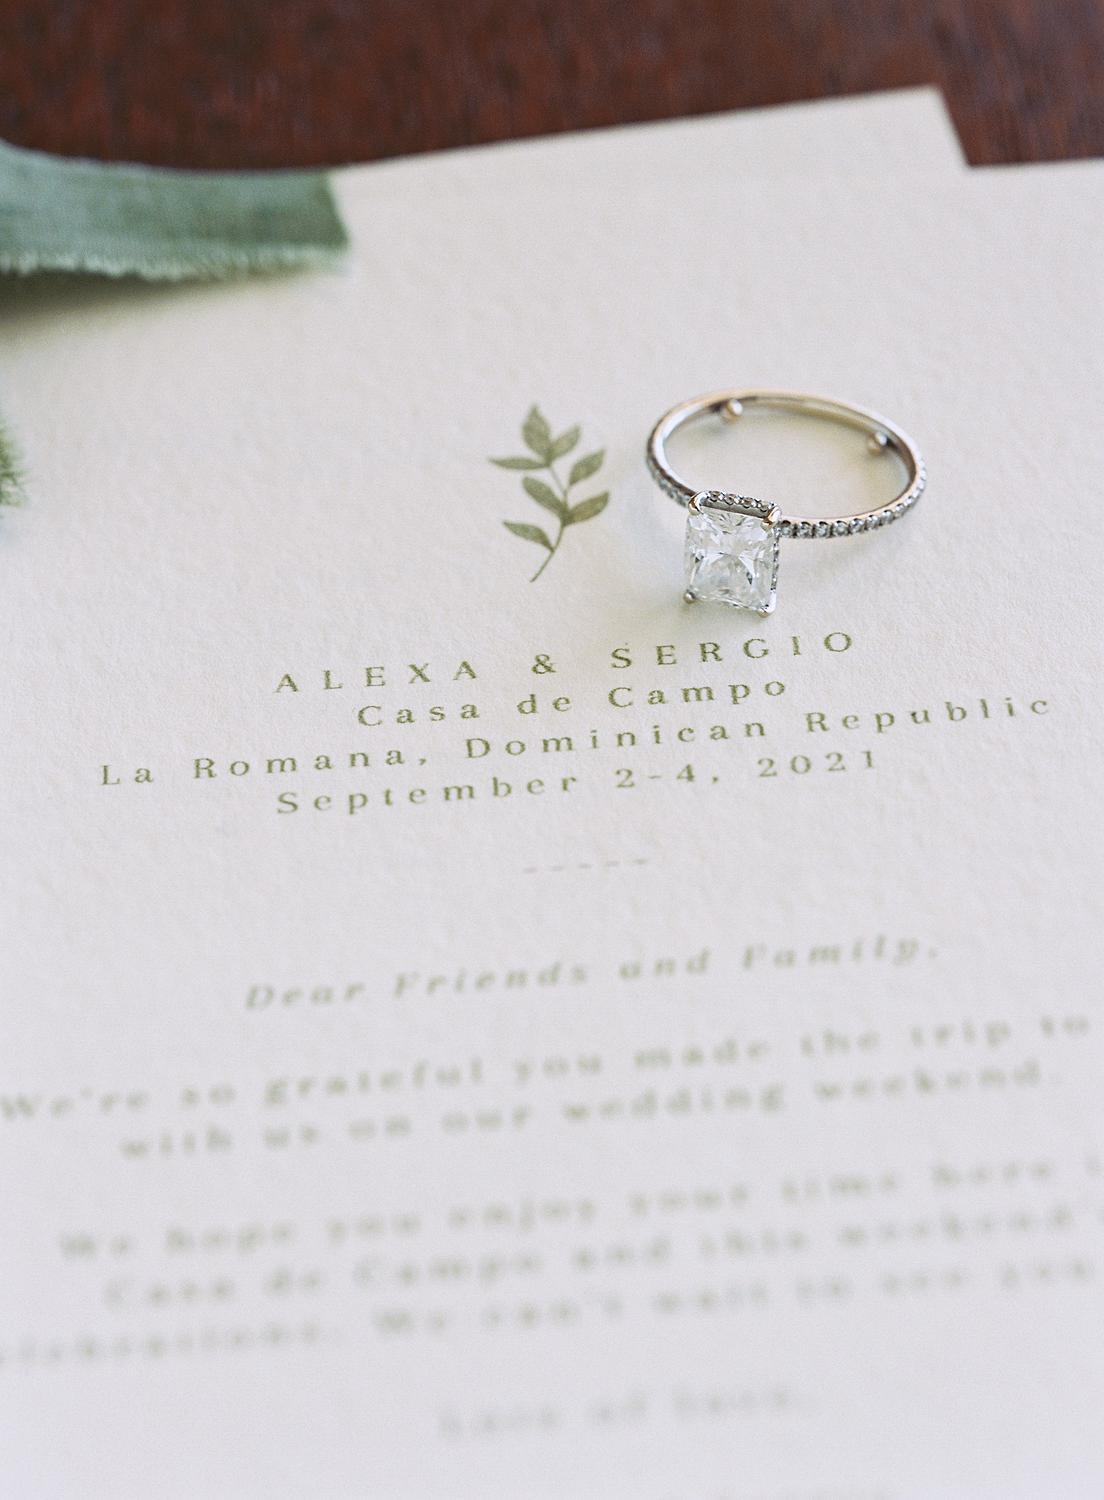 Bride's engagement ring on wedding invitation for Altos de Chavón wedding.